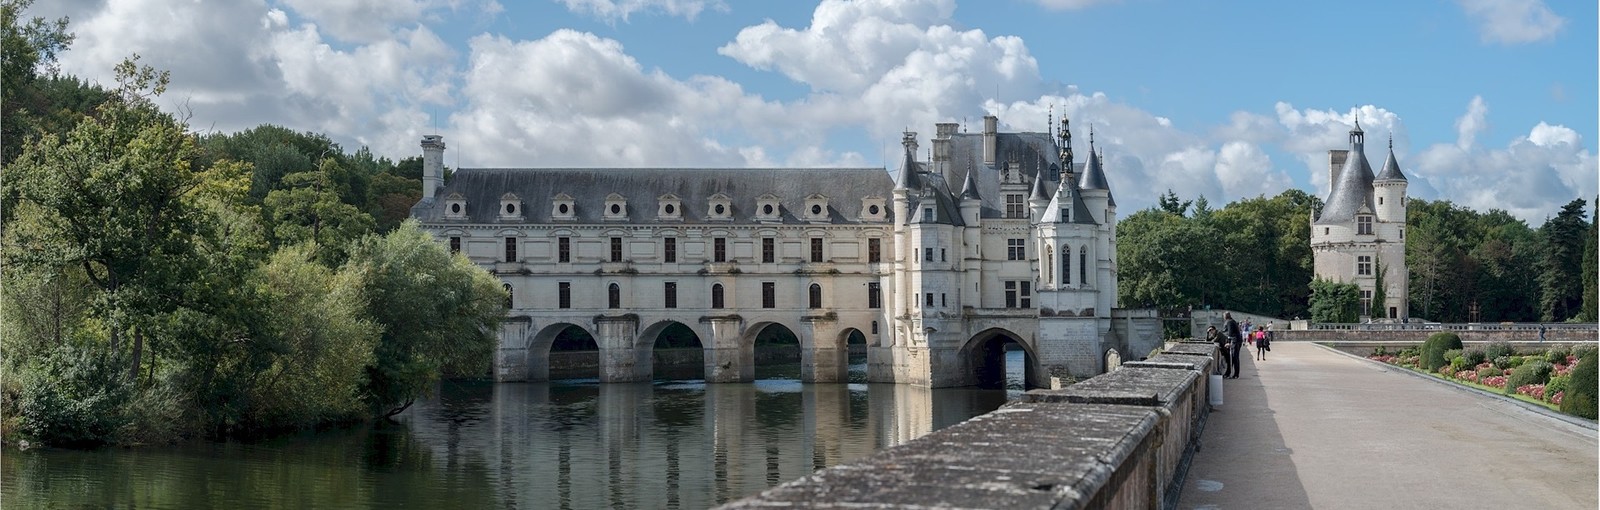 Tours 卢瓦尔河城堡-诺曼底 - 法国多个地区 - 从巴黎出发的多日游